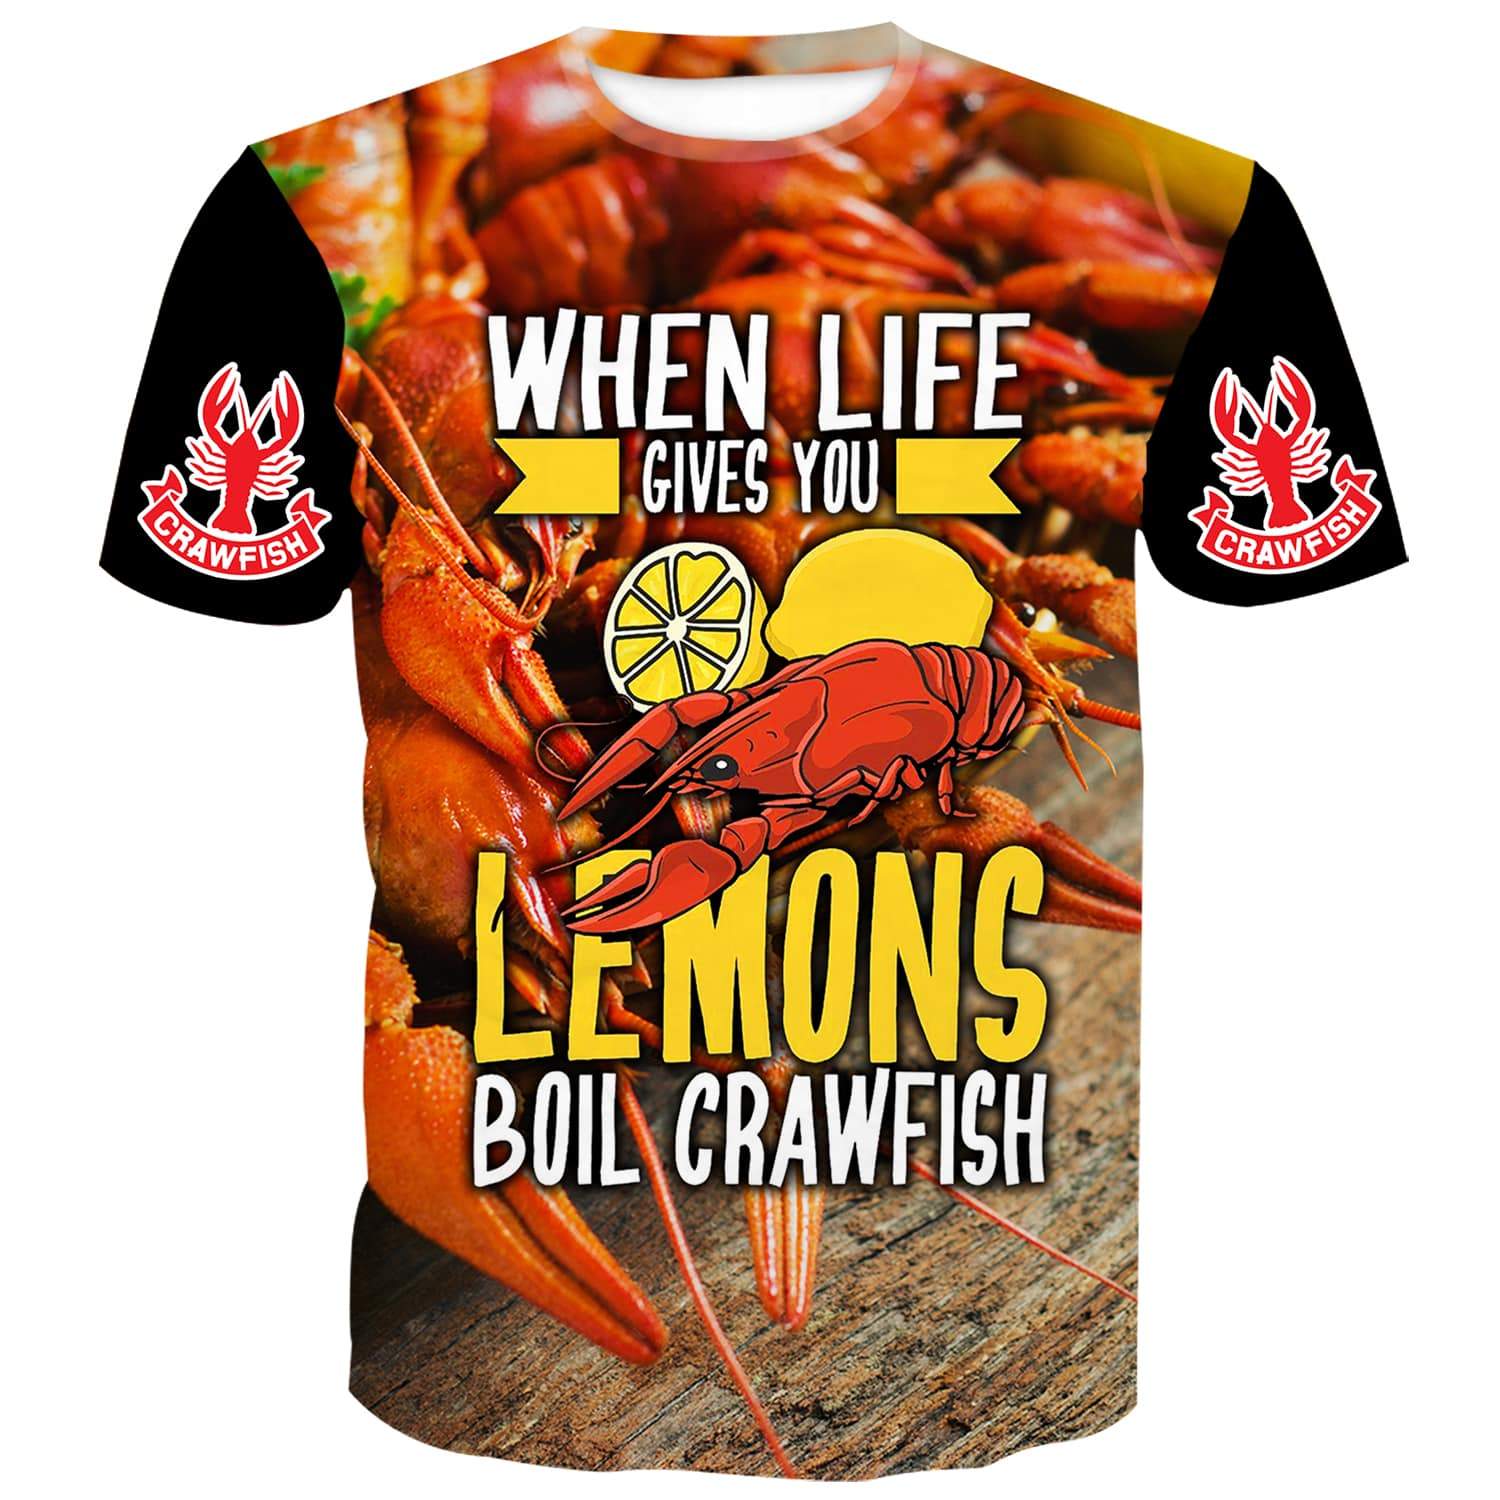 When life gives you lemons boil Crawfish - Kid's T-Shirt